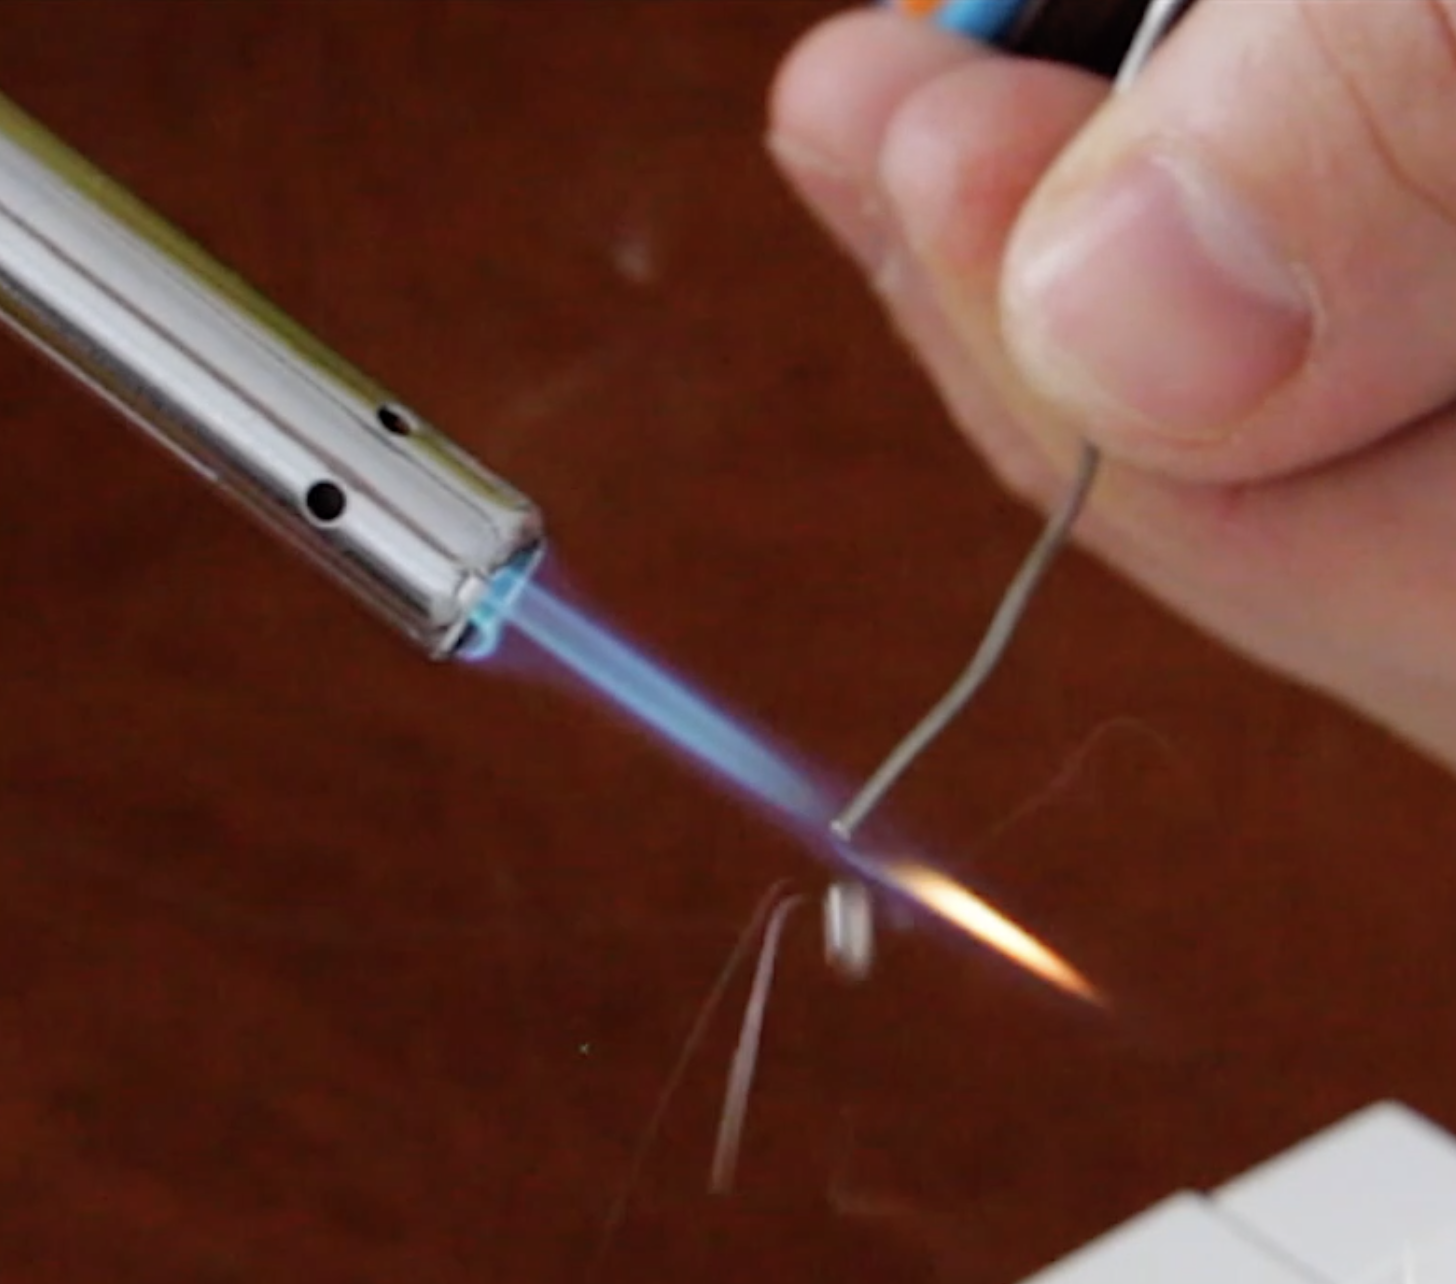 DIY Free Gas Torch | Welding Gun | How to Make Jet Flame